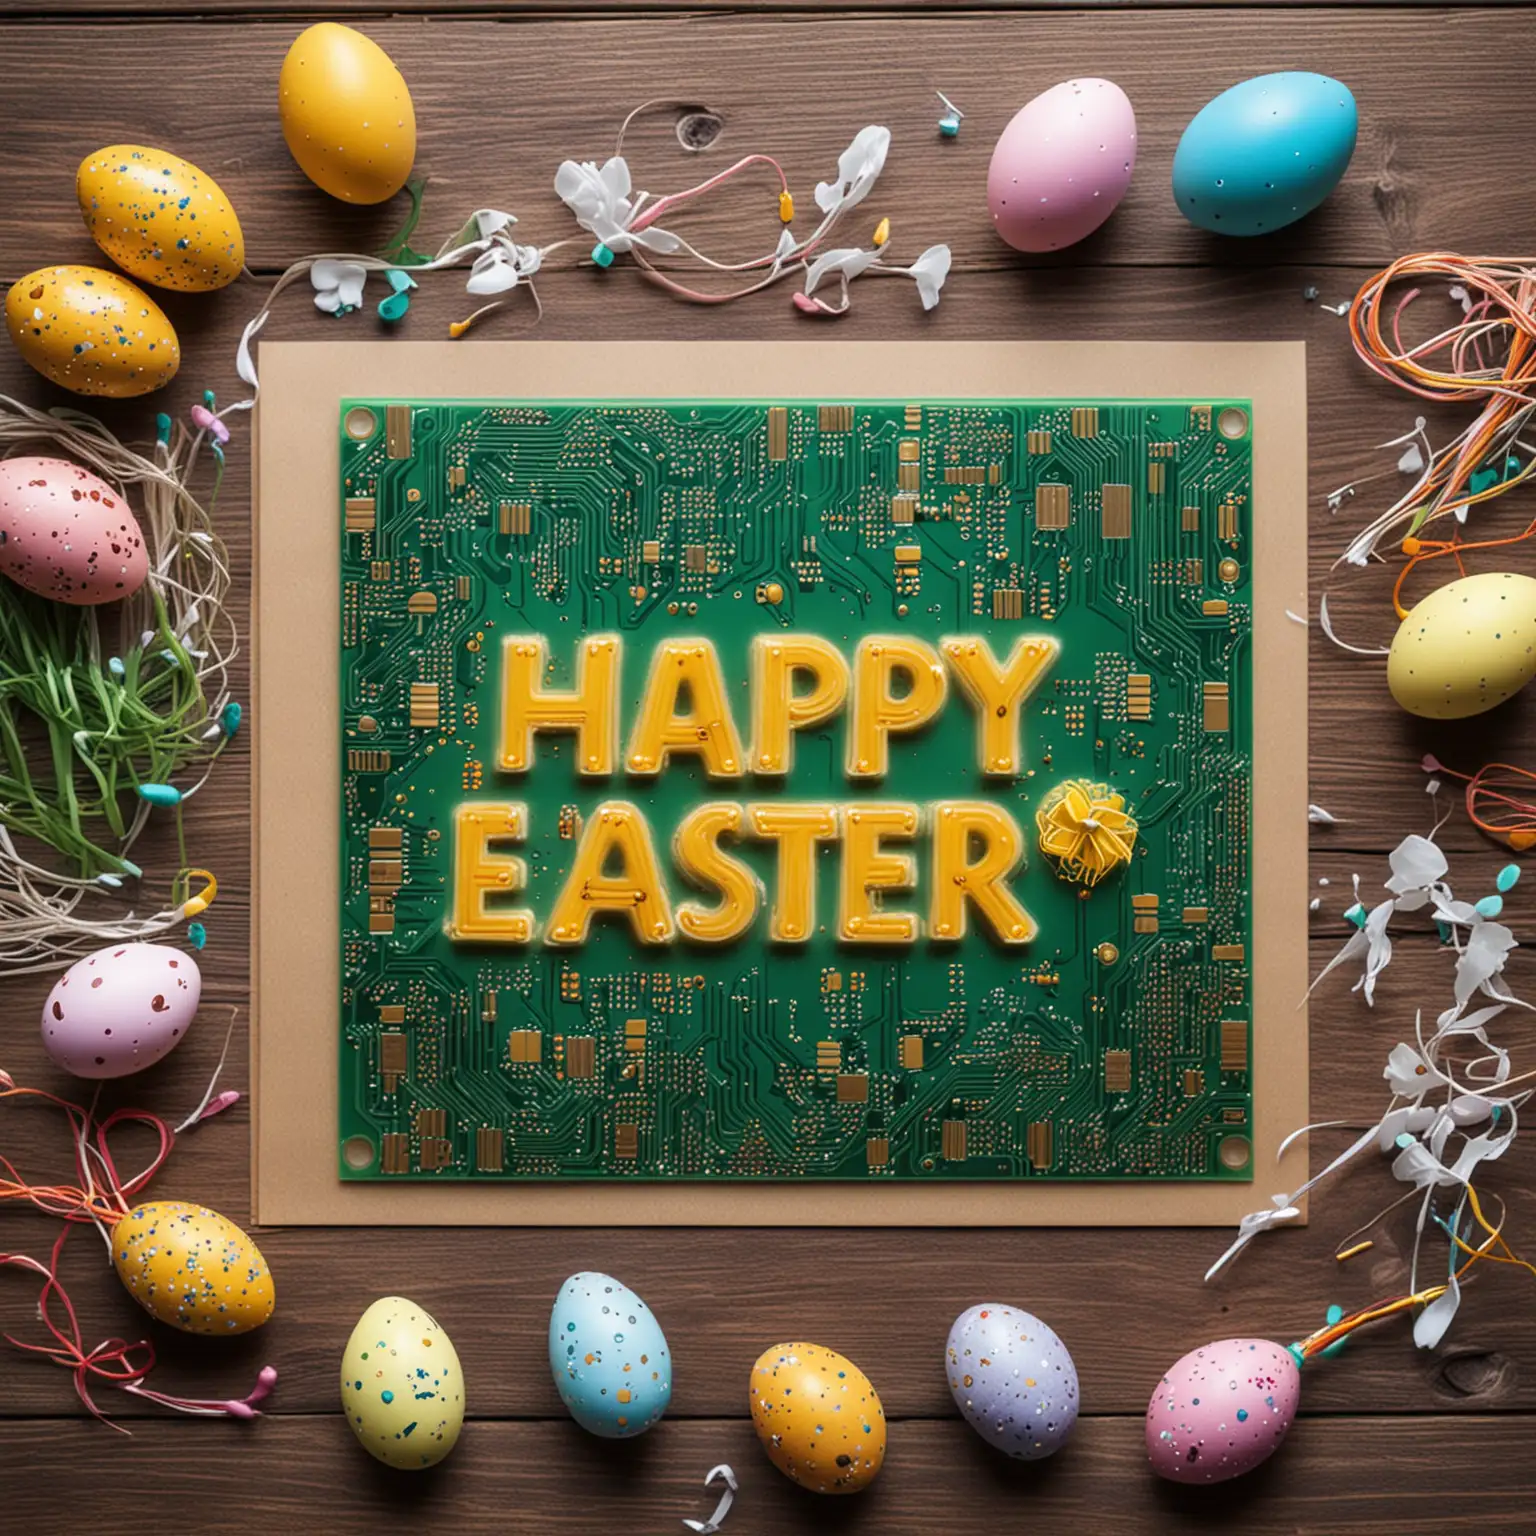 Joyful Easter Greetings with Printed Circuit Boards